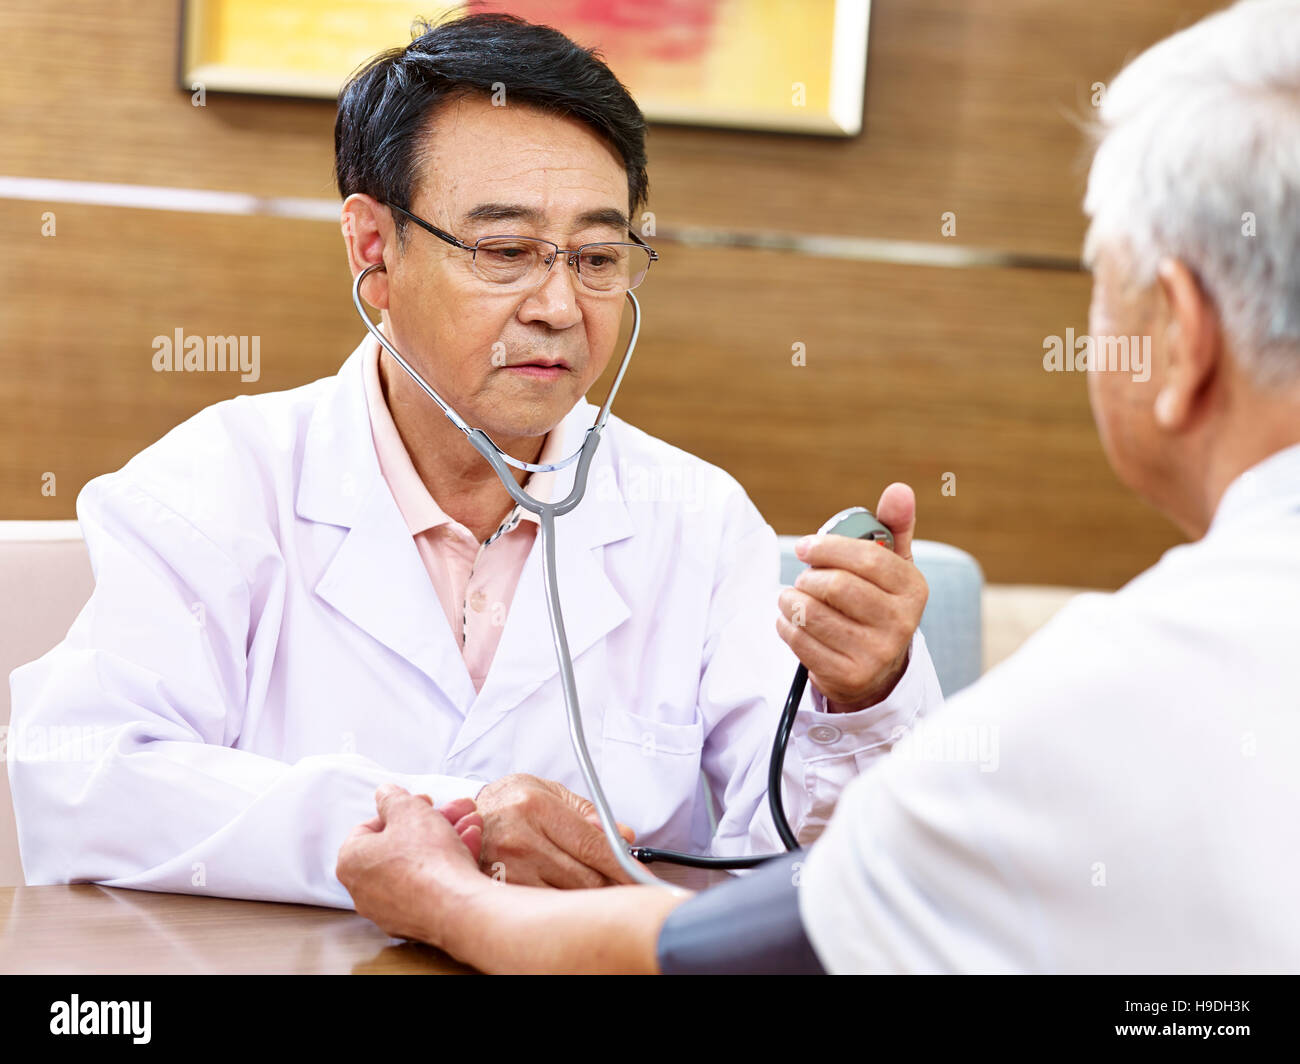 https://c8.alamy.com/comp/H9DH3K/asian-doctor-measuring-blood-pressure-of-a-senior-patient-using-sphygmomanometer-H9DH3K.jpg